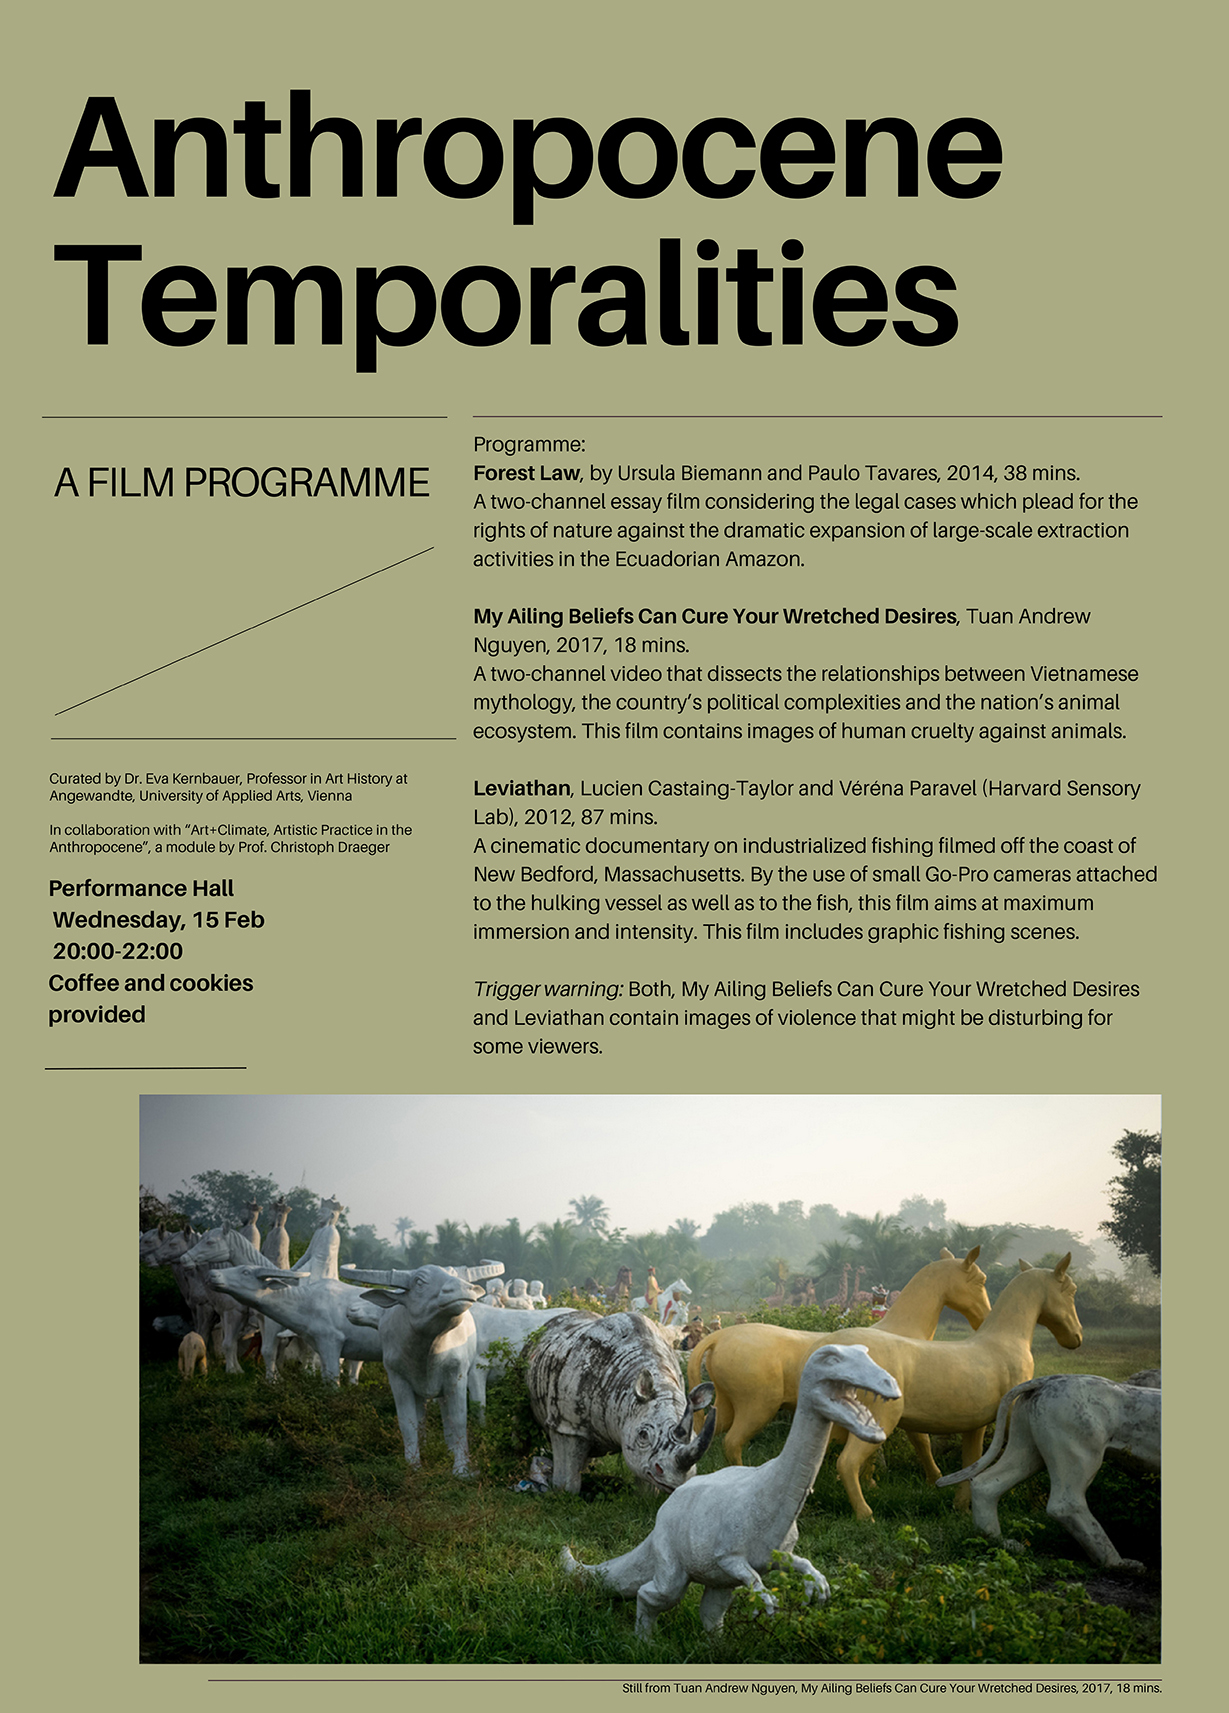 Anthropocene Temporalities Workshop